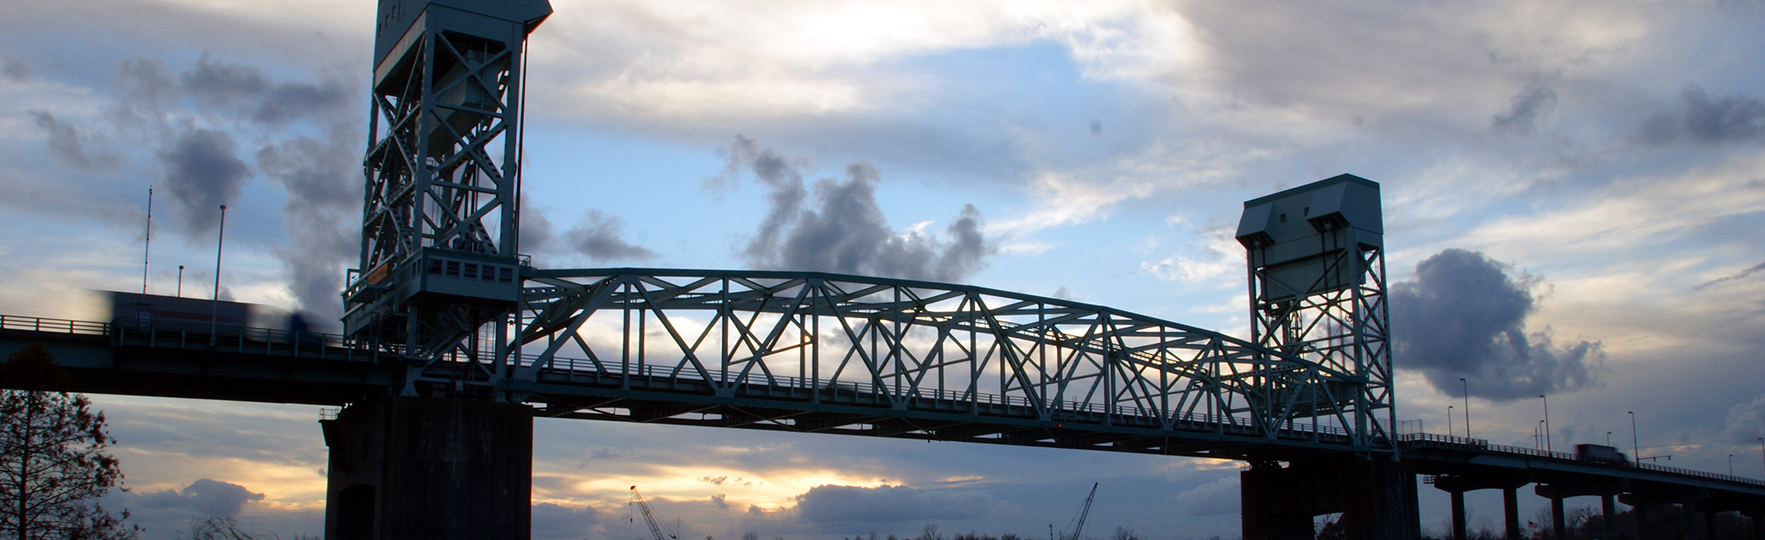 Cape Fear Memorial Bridge silhouetted at dusk.